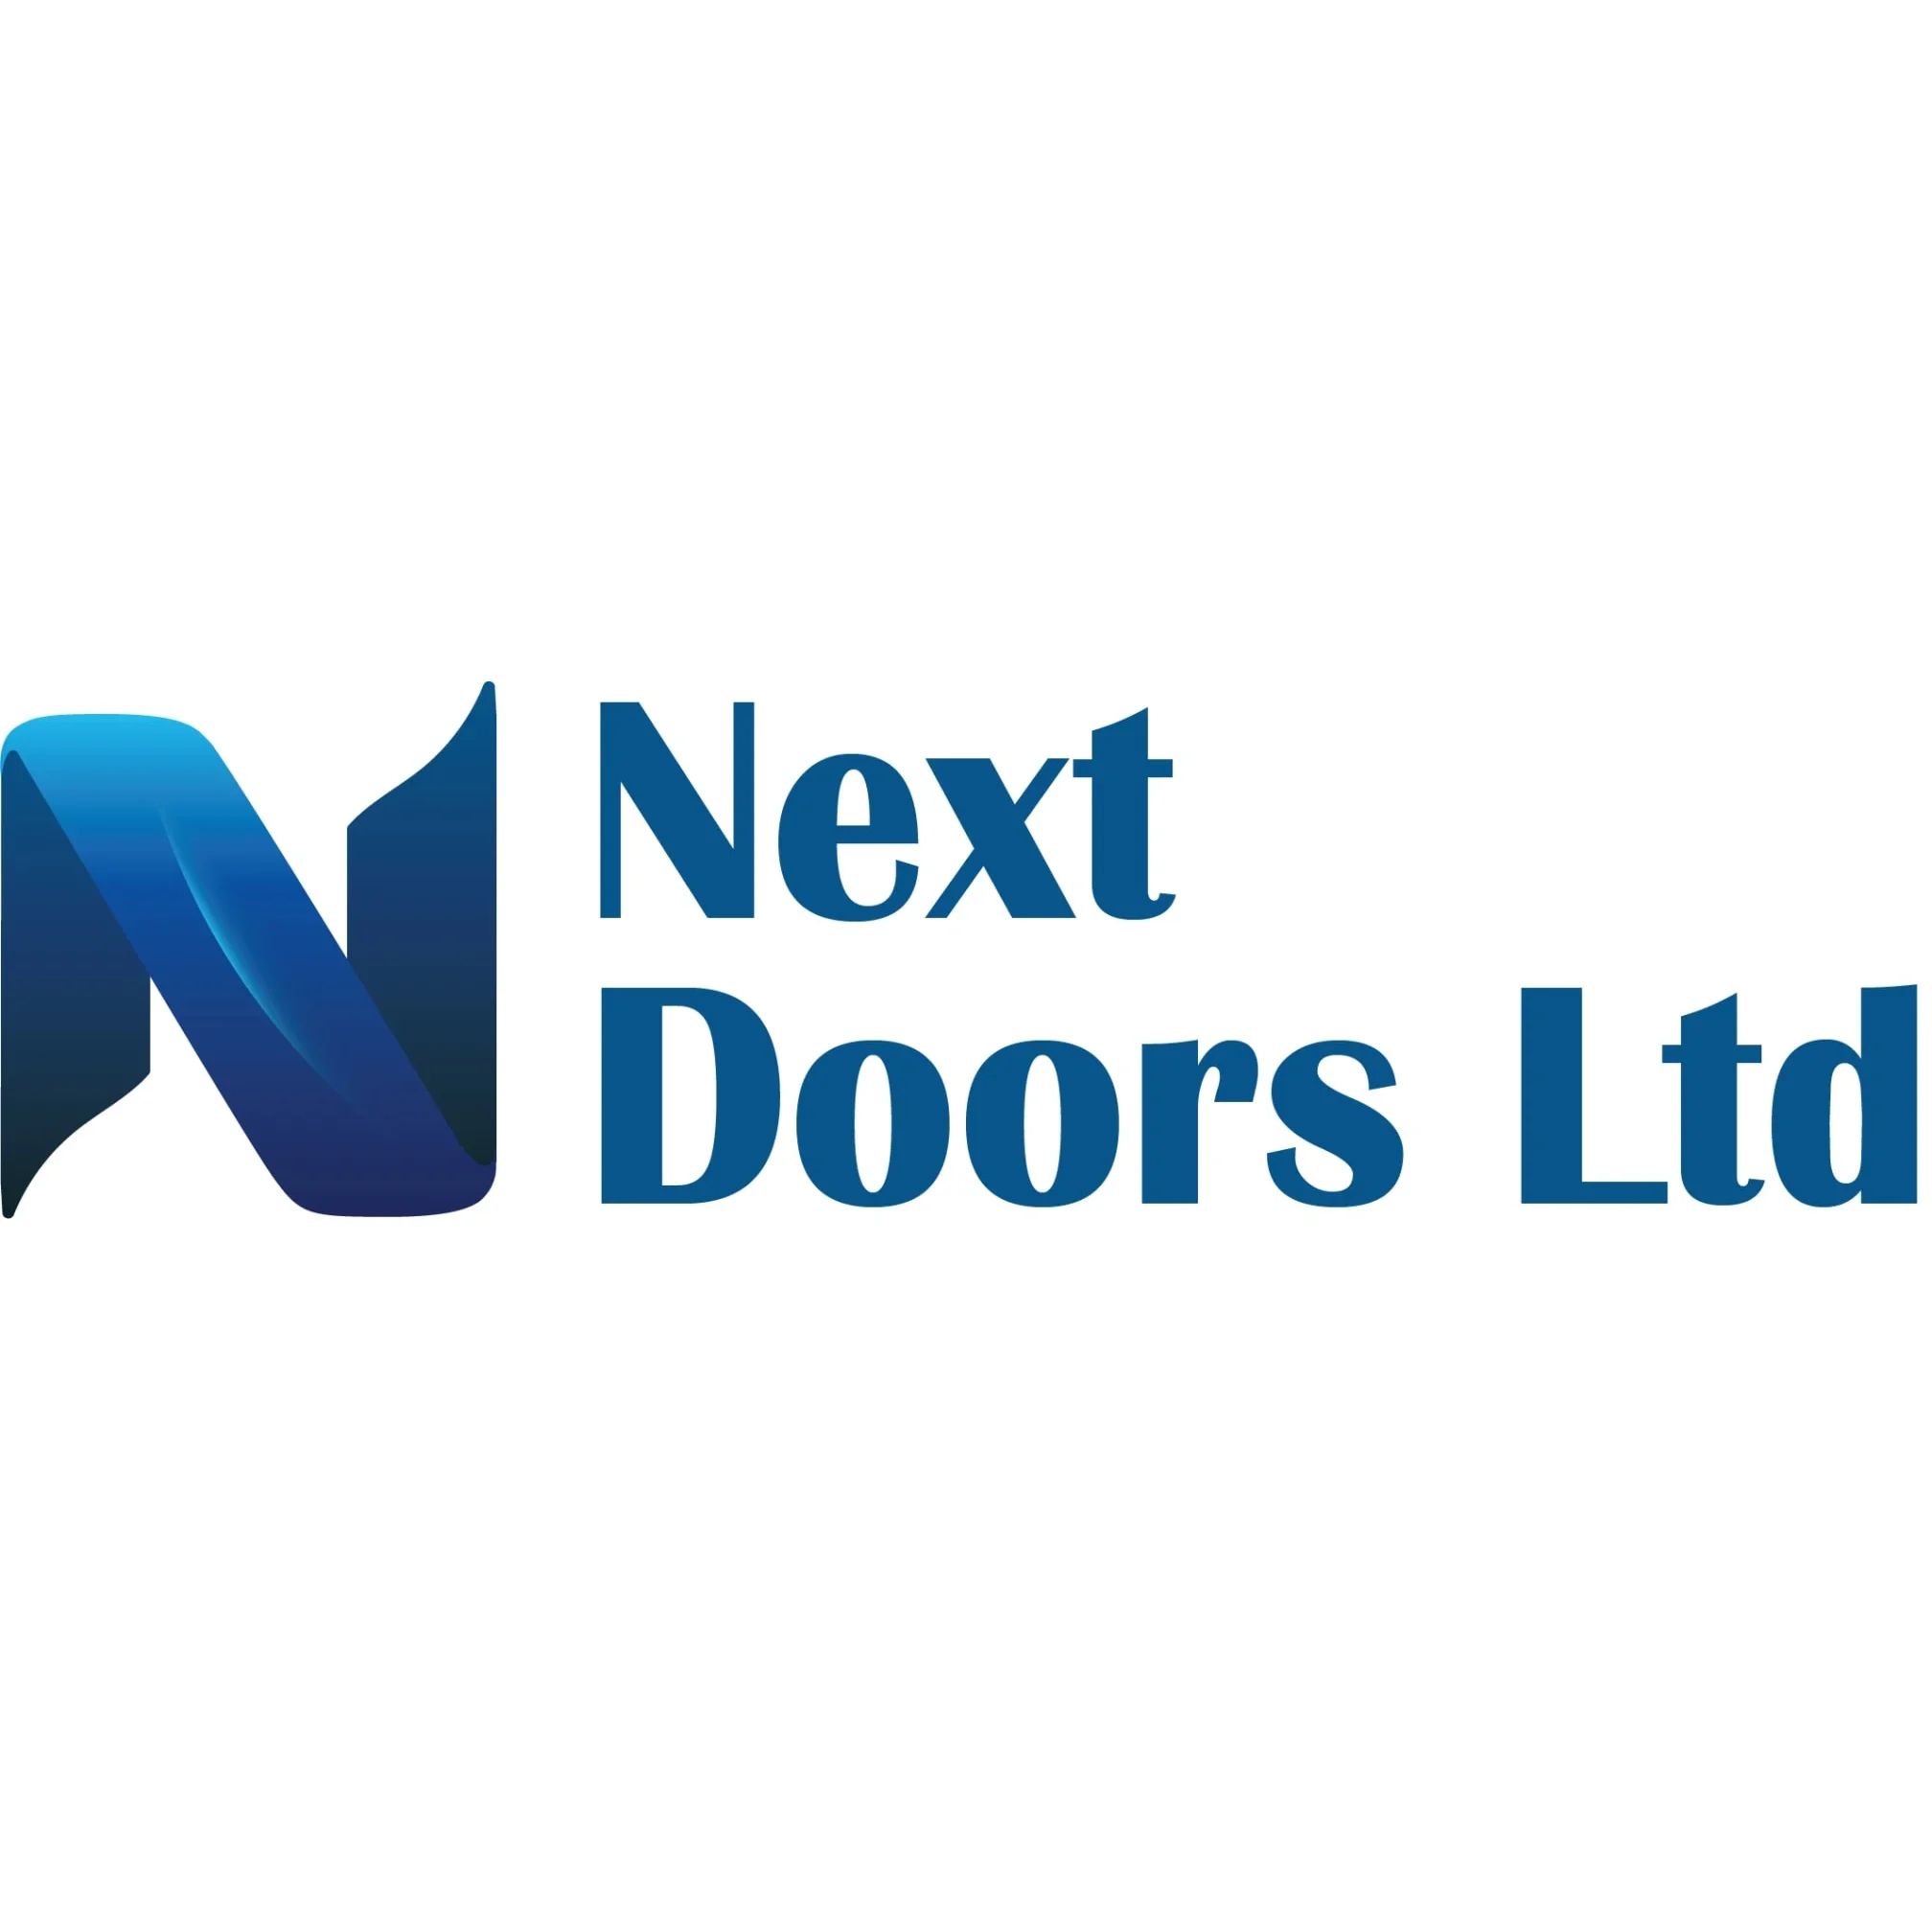 LOGO Next Doors Ltd Swanley 08435 231063